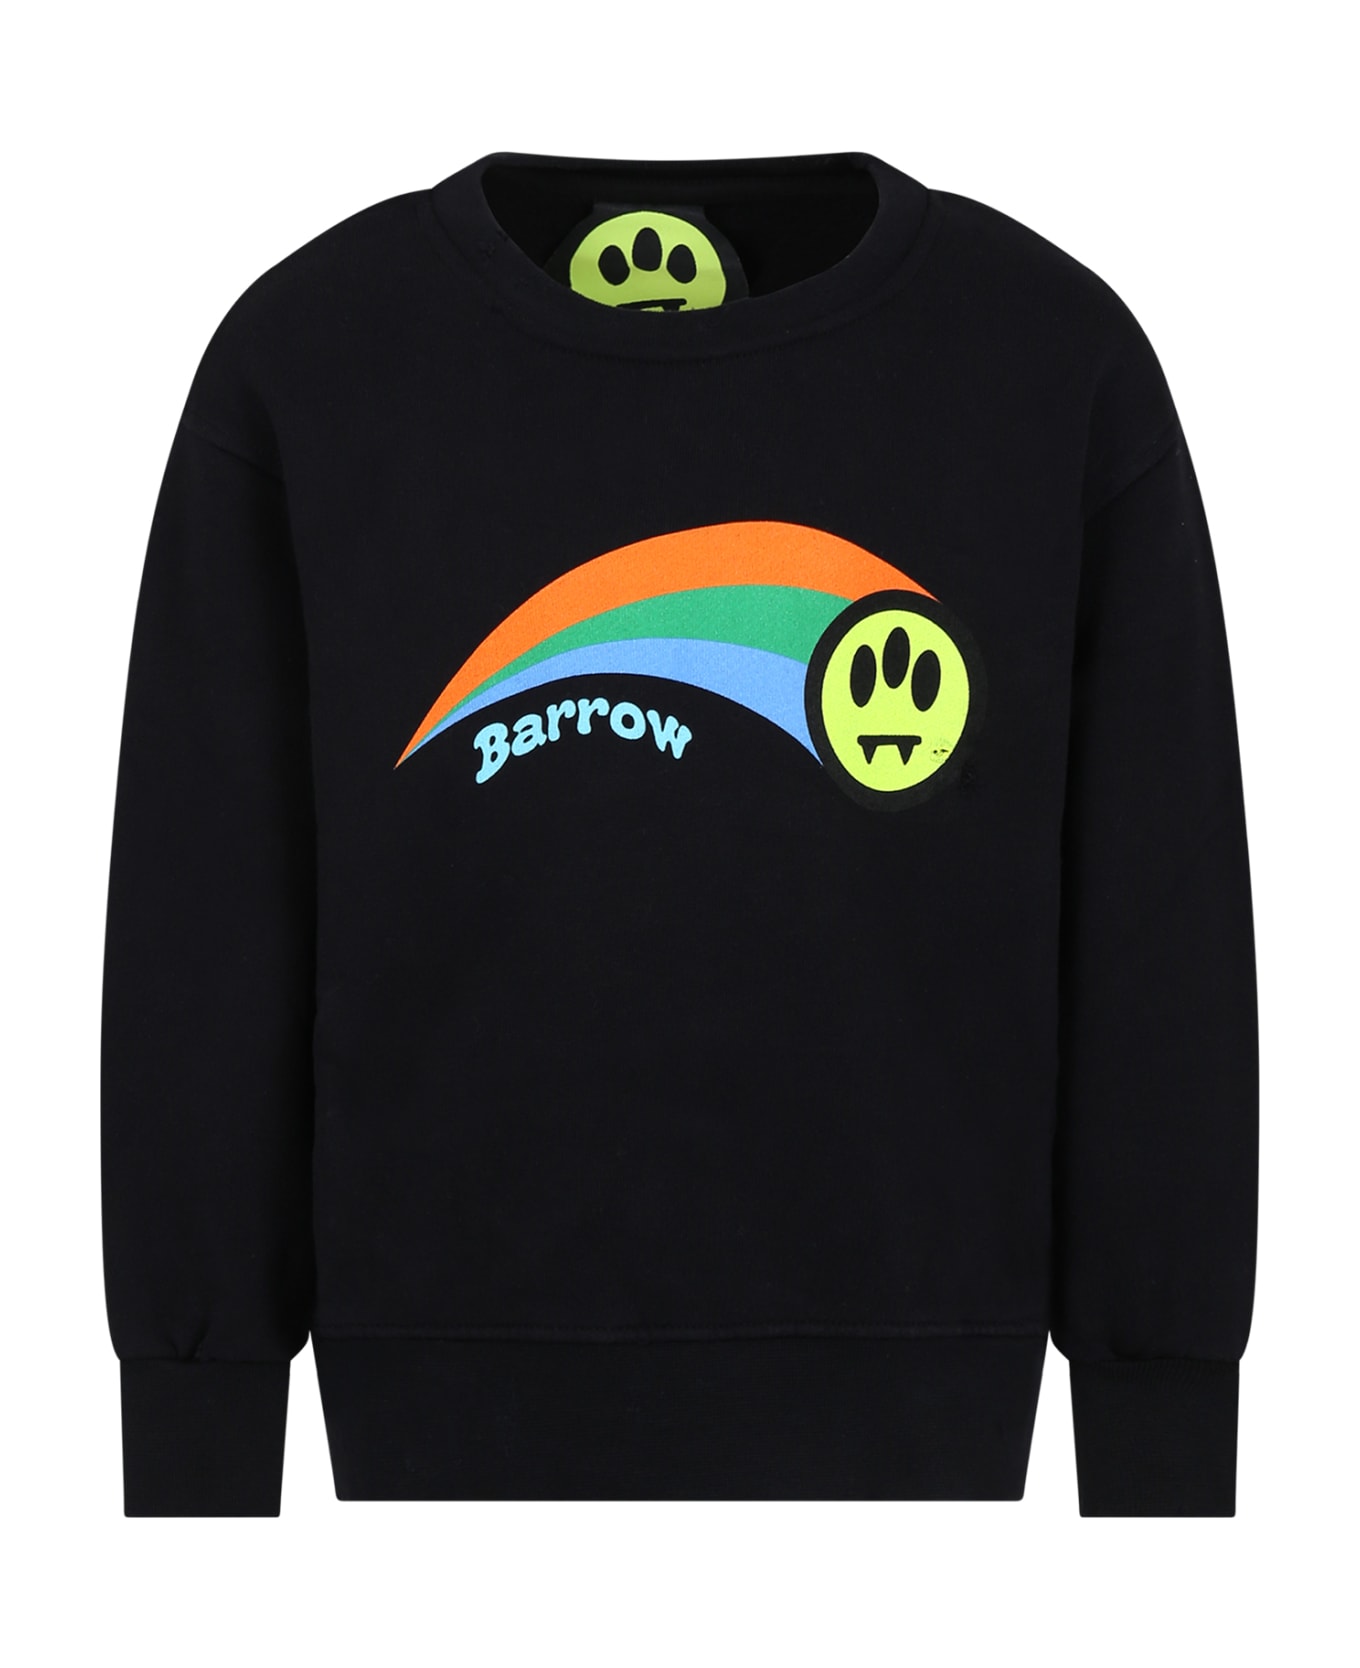 Barrow Black Sweatshirt For Kids With Logo And Print - Black